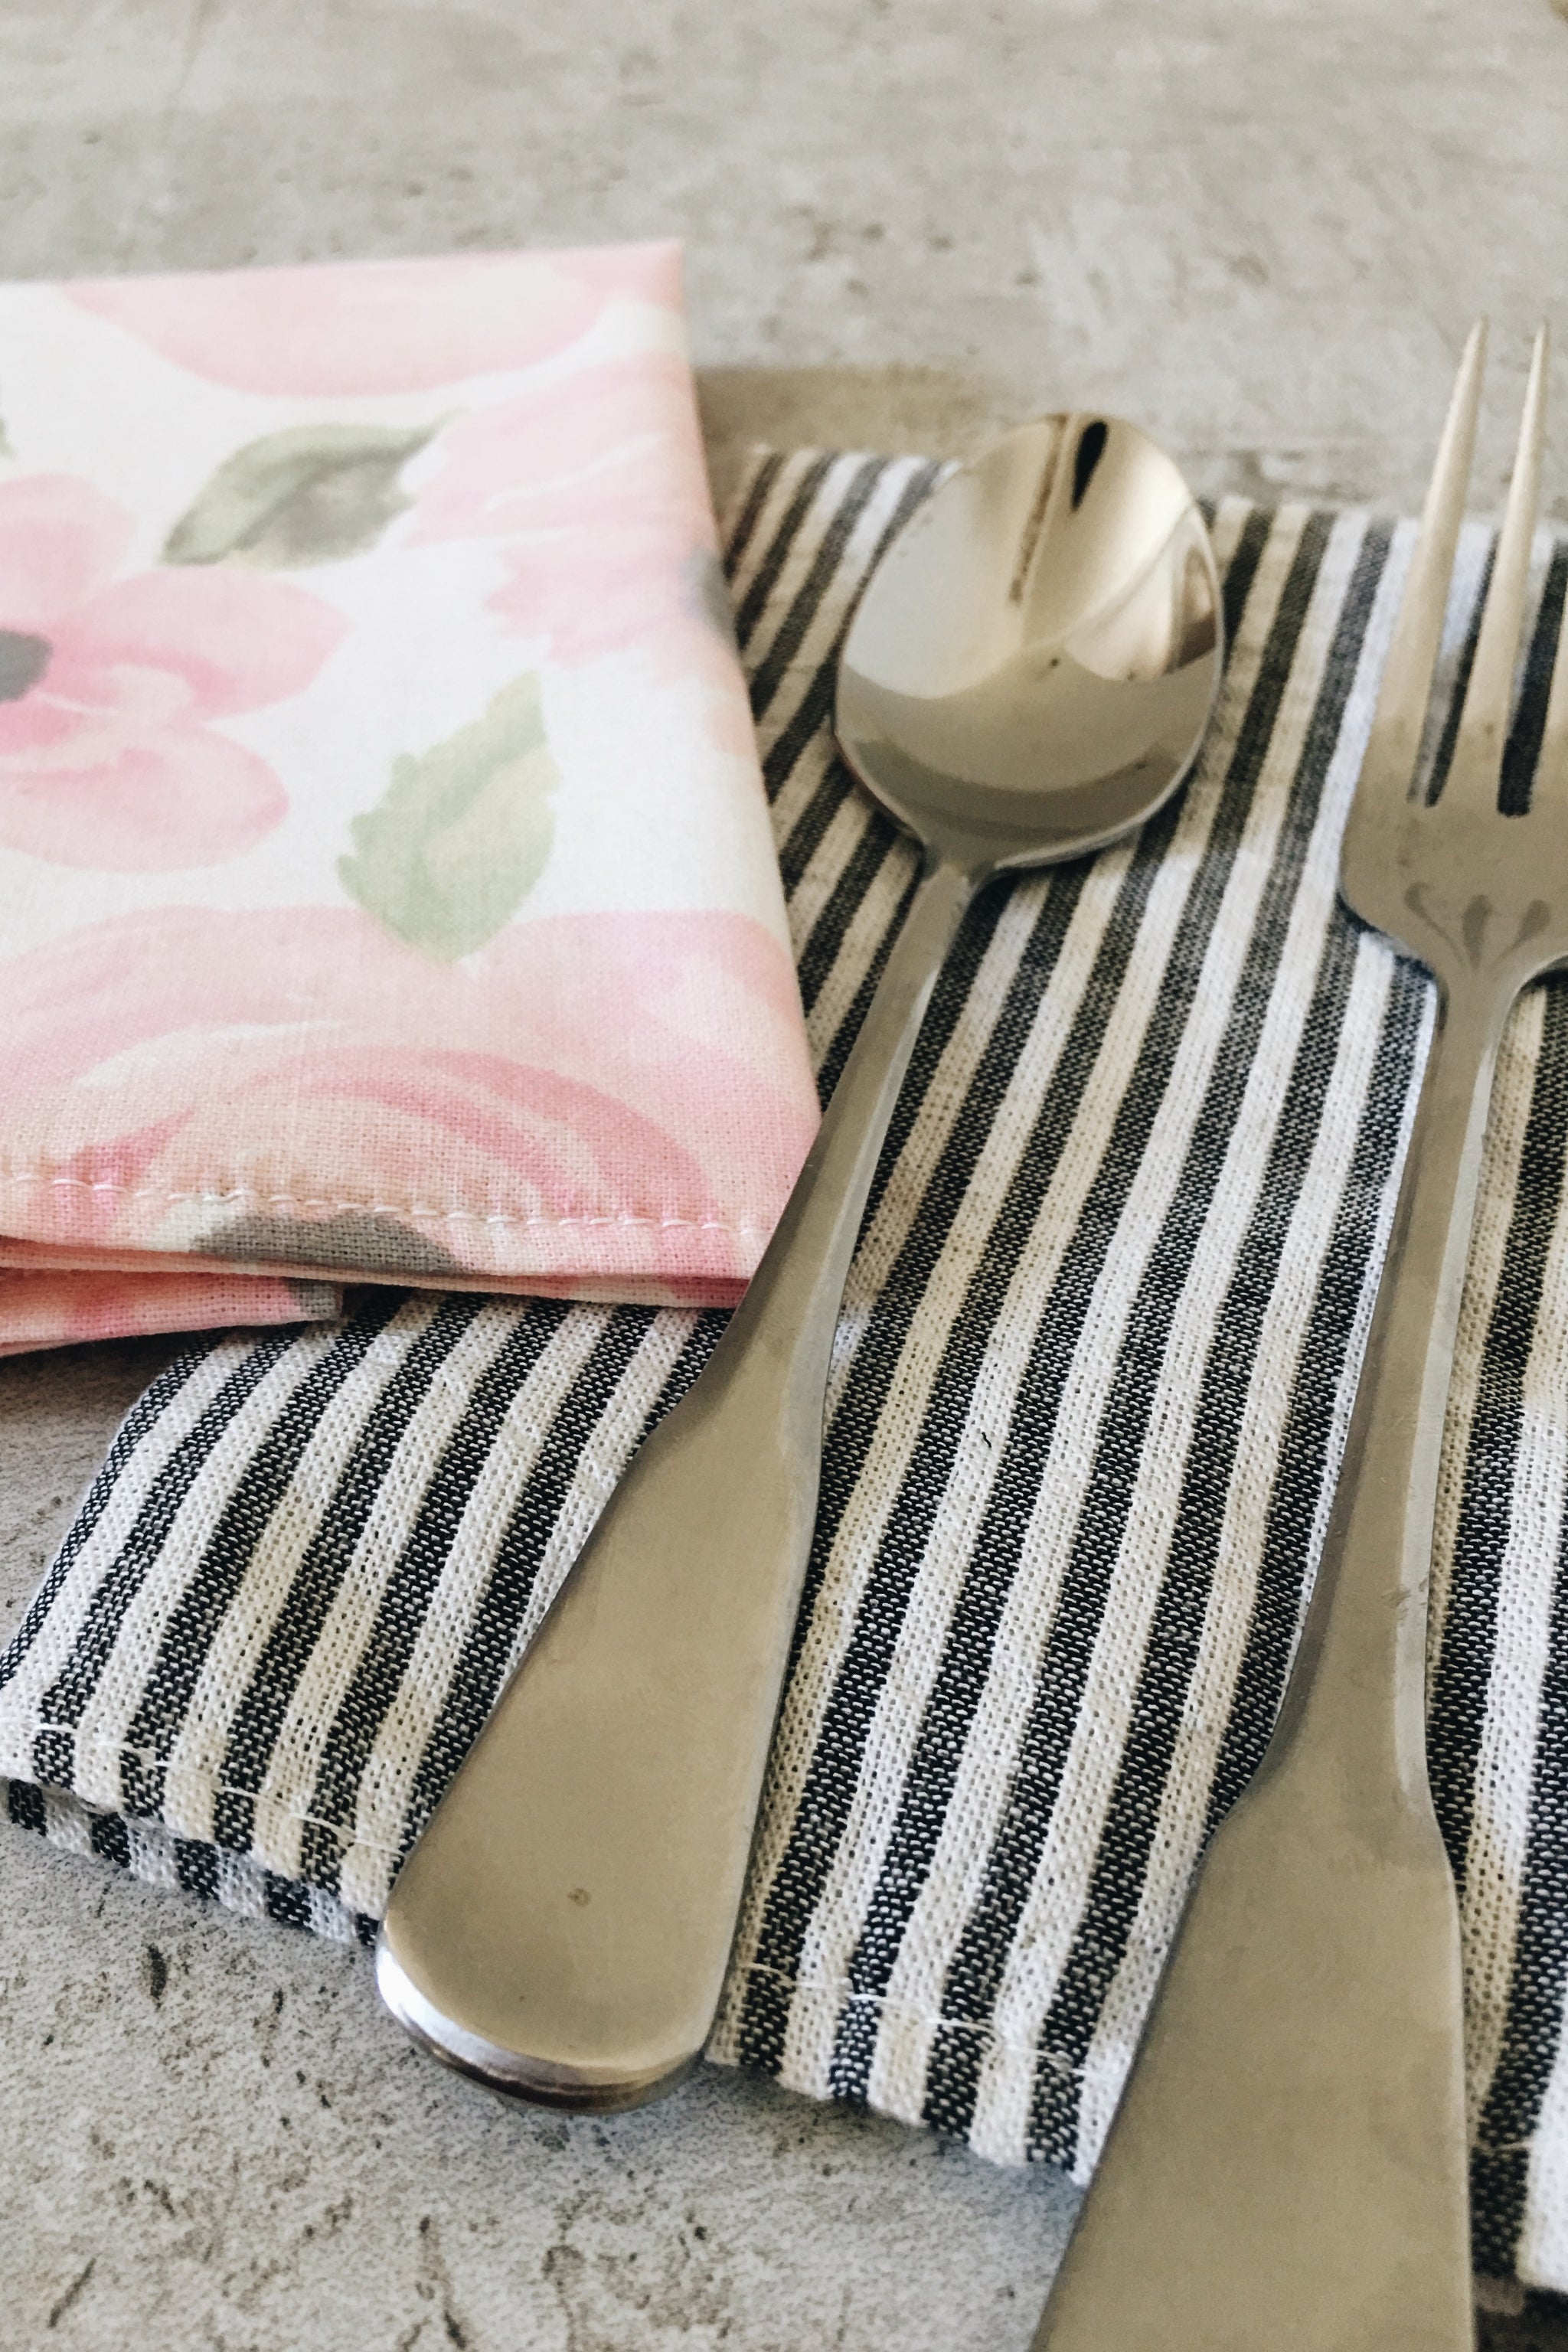 All Cotton and Linen Cloth Napkins - Dinner Napkins Set of 4